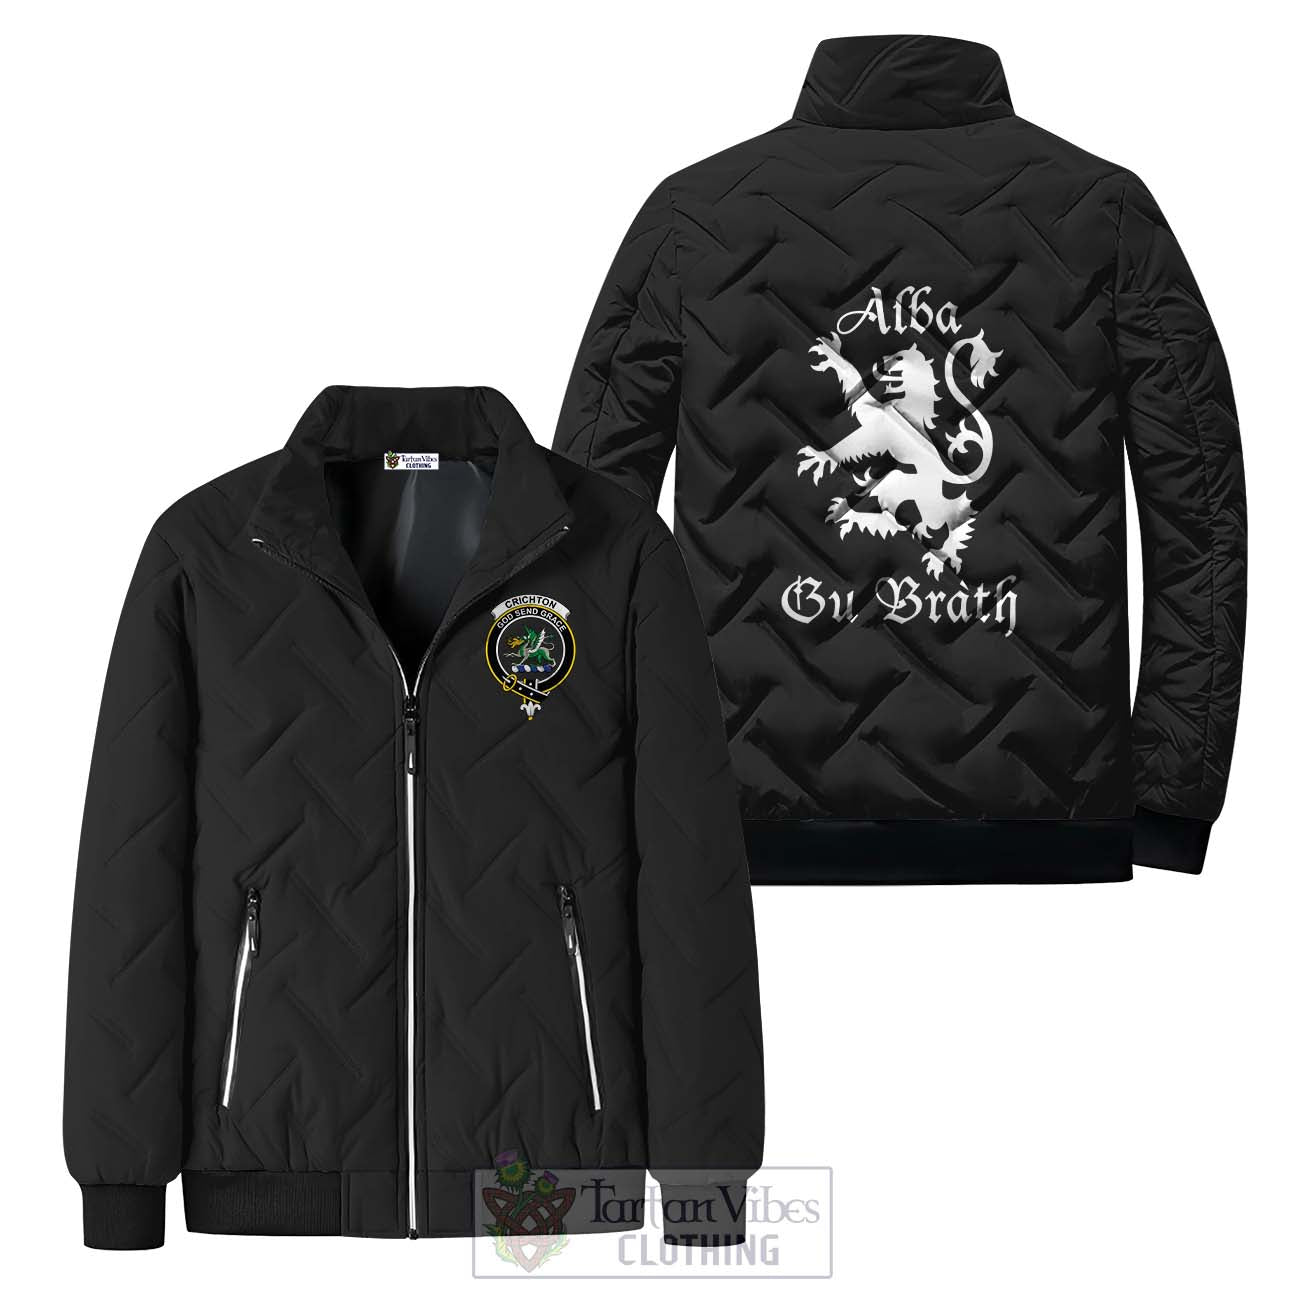 Tartan Vibes Clothing Crichton Family Crest Padded Cotton Jacket Lion Rampant Alba Gu Brath Style